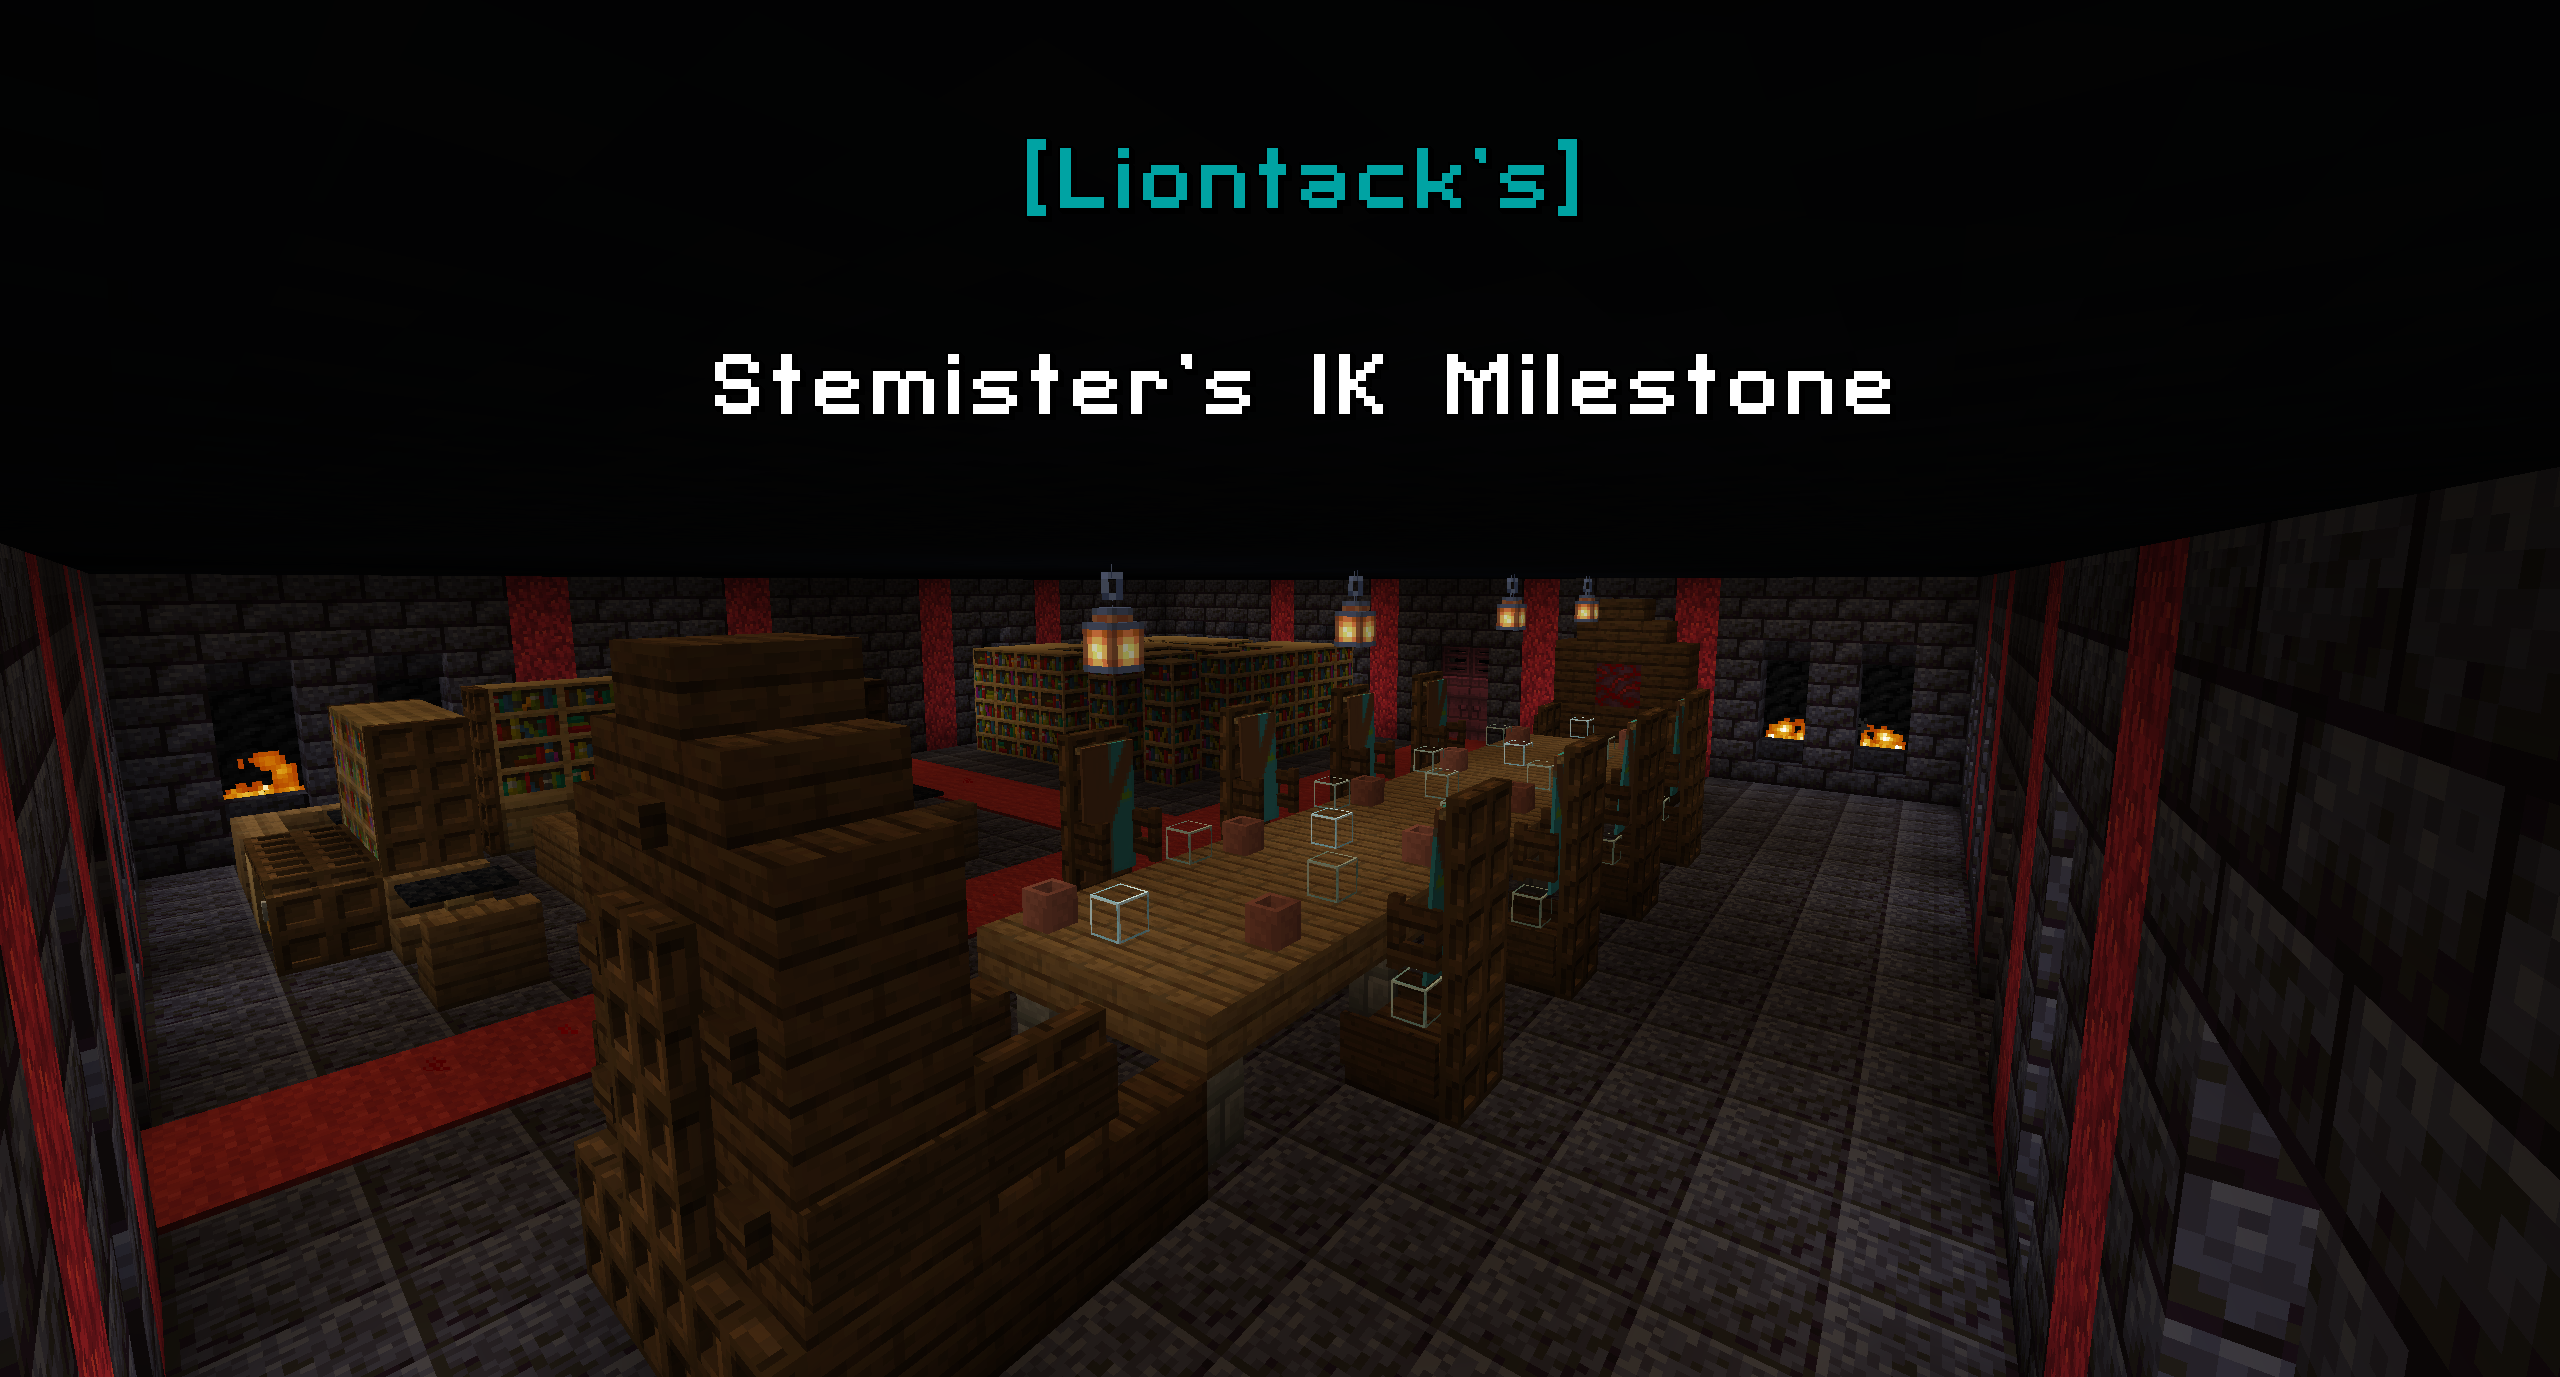 Baixar [Liontack's] Stemister's 1K Milestone para Minecraft 1.16.5